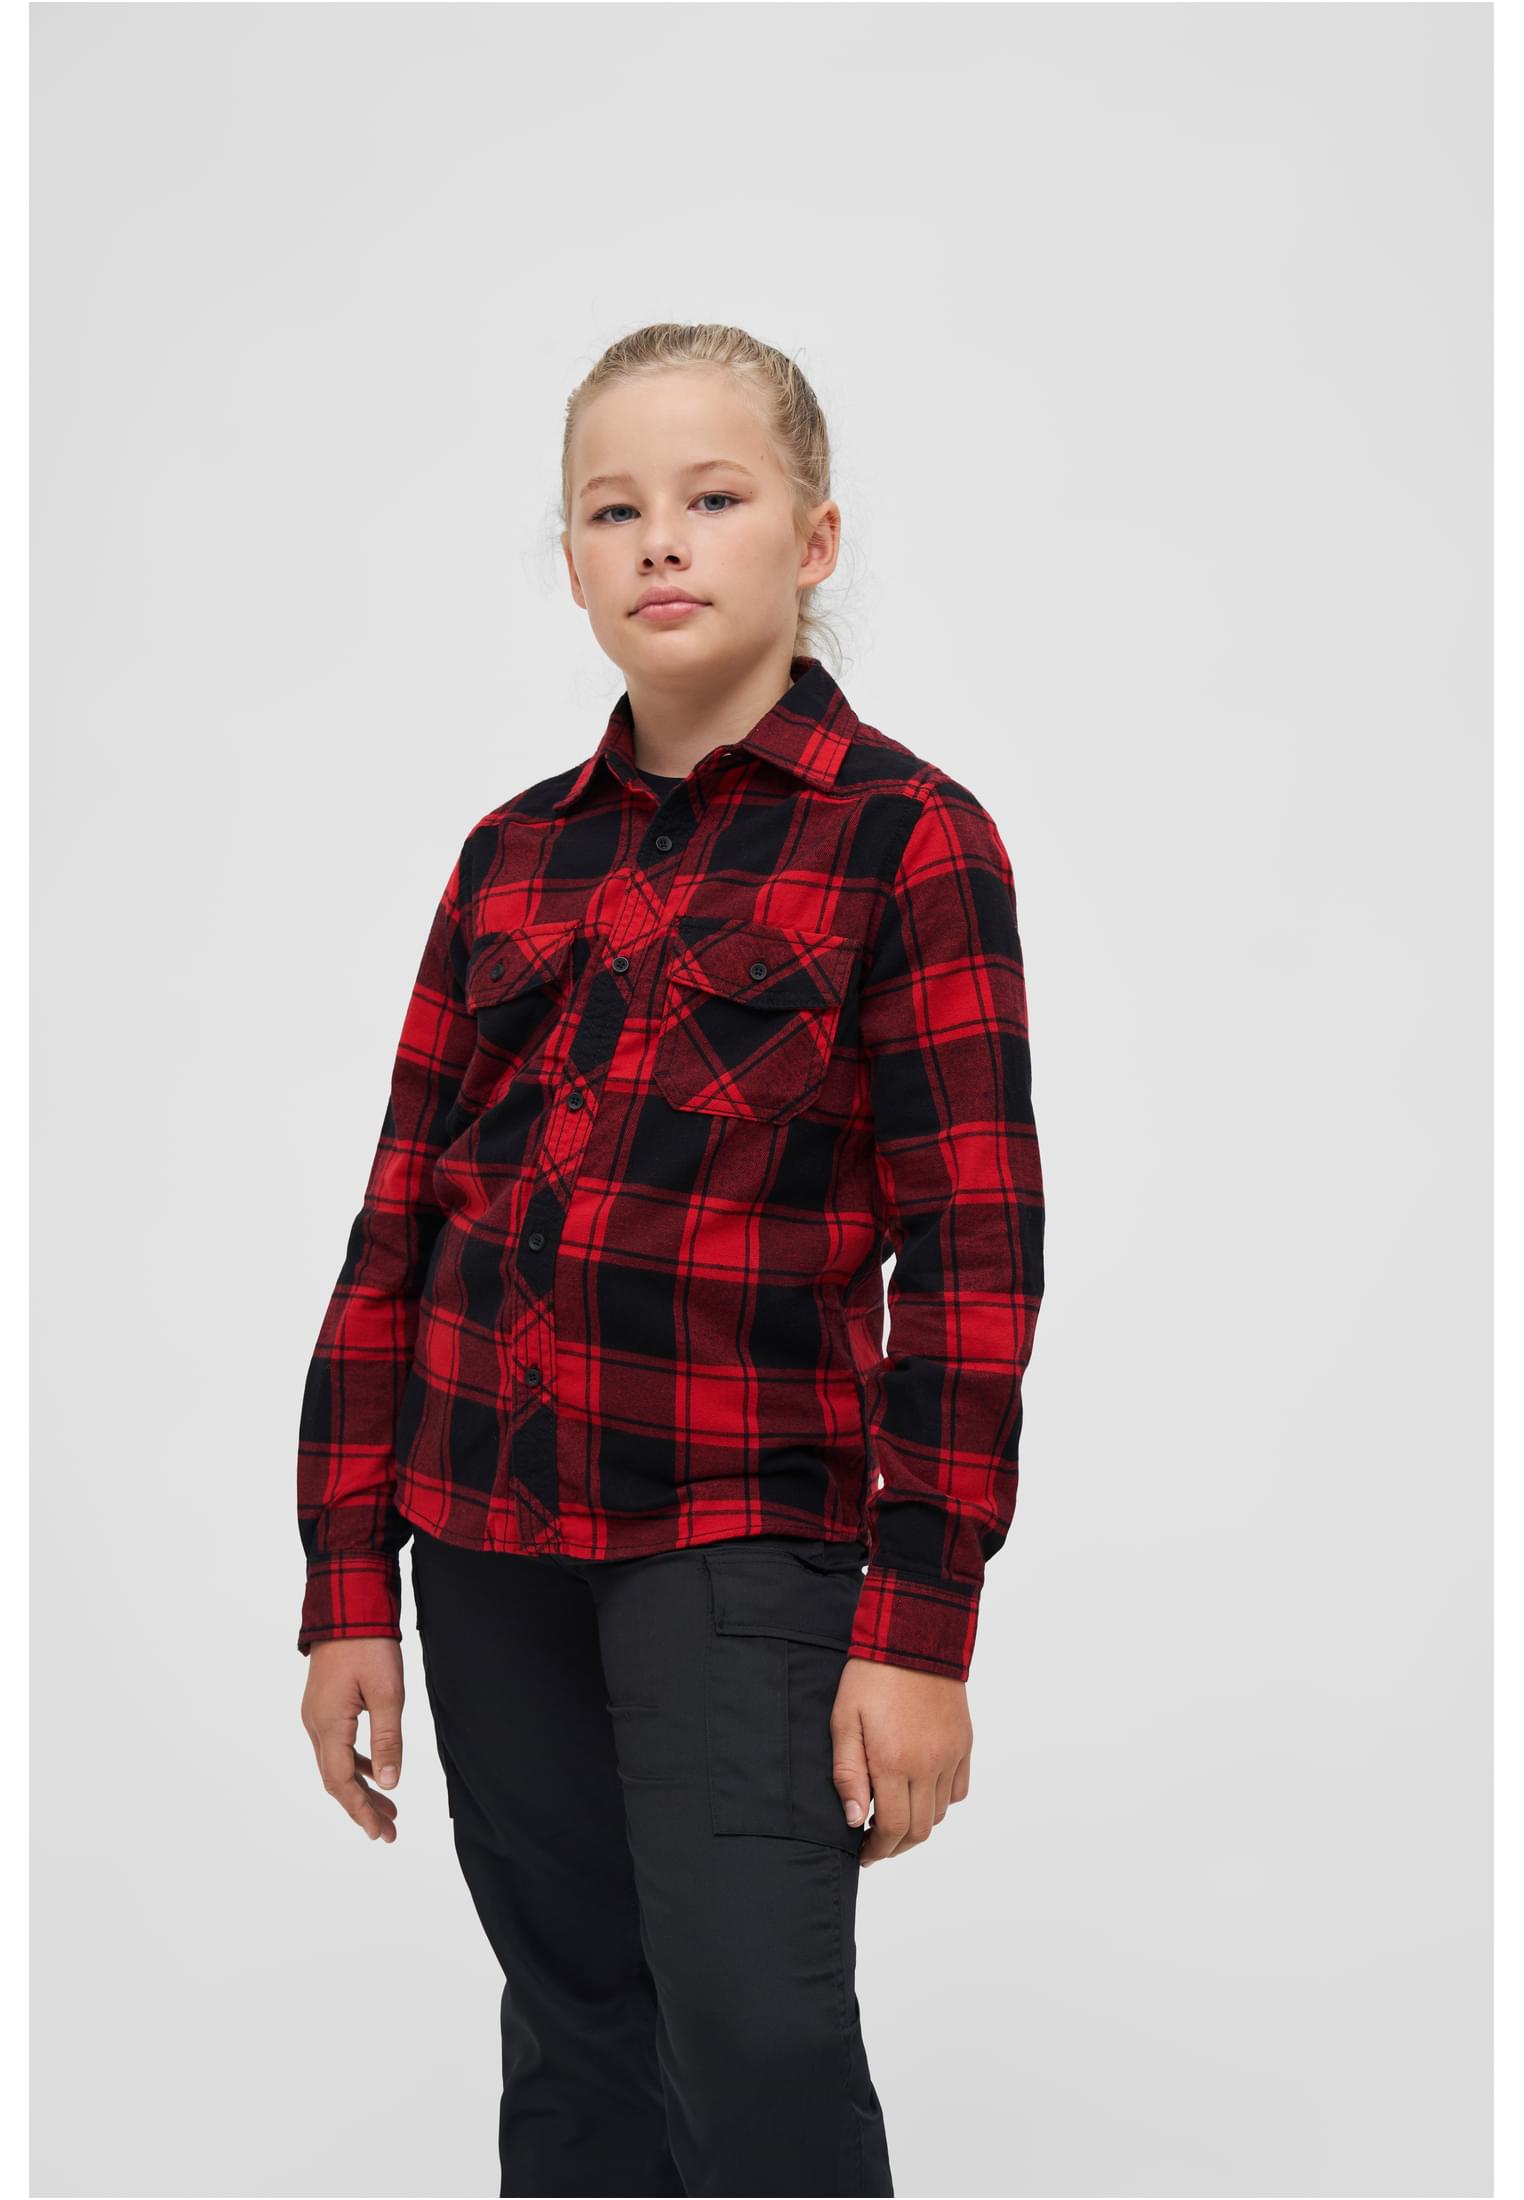 Kinder Checkshirt Kids in Farbe red/black